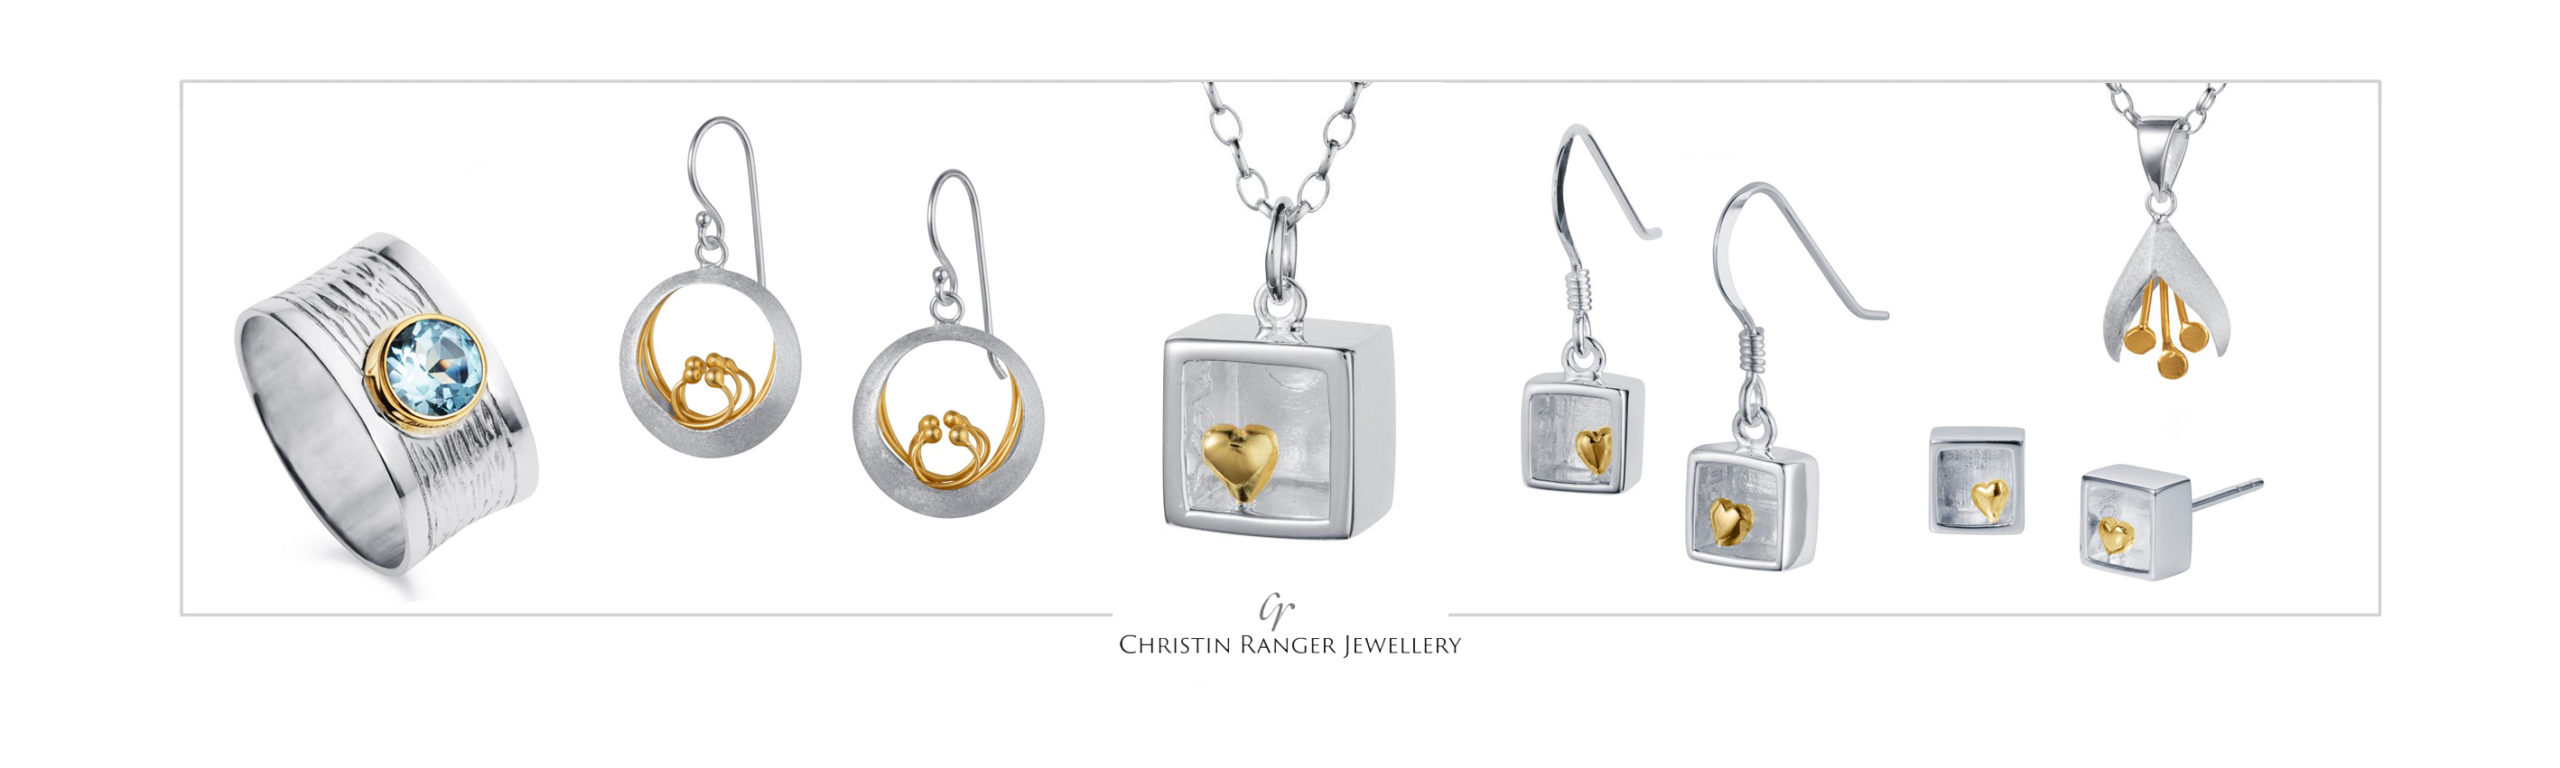 Christin Ranger Jewellery available at Louise Shafar